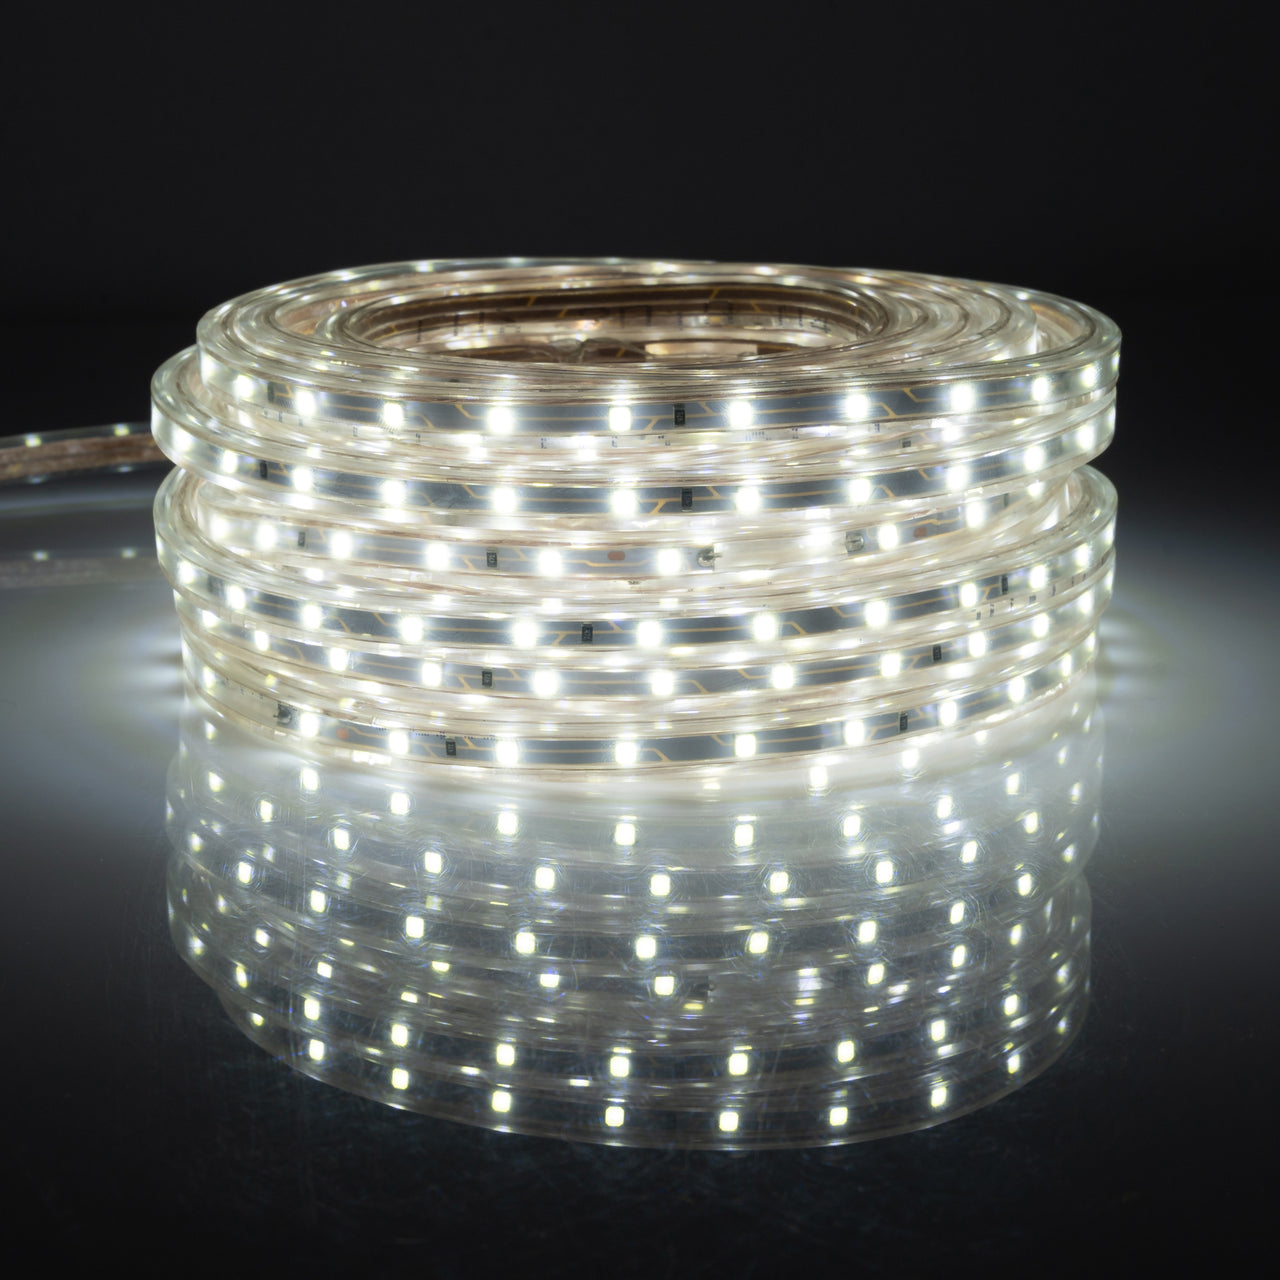 White SMD 2835 LED Flexible Indoor/Outdoor Light Strip - West Ivory LED Lighting 